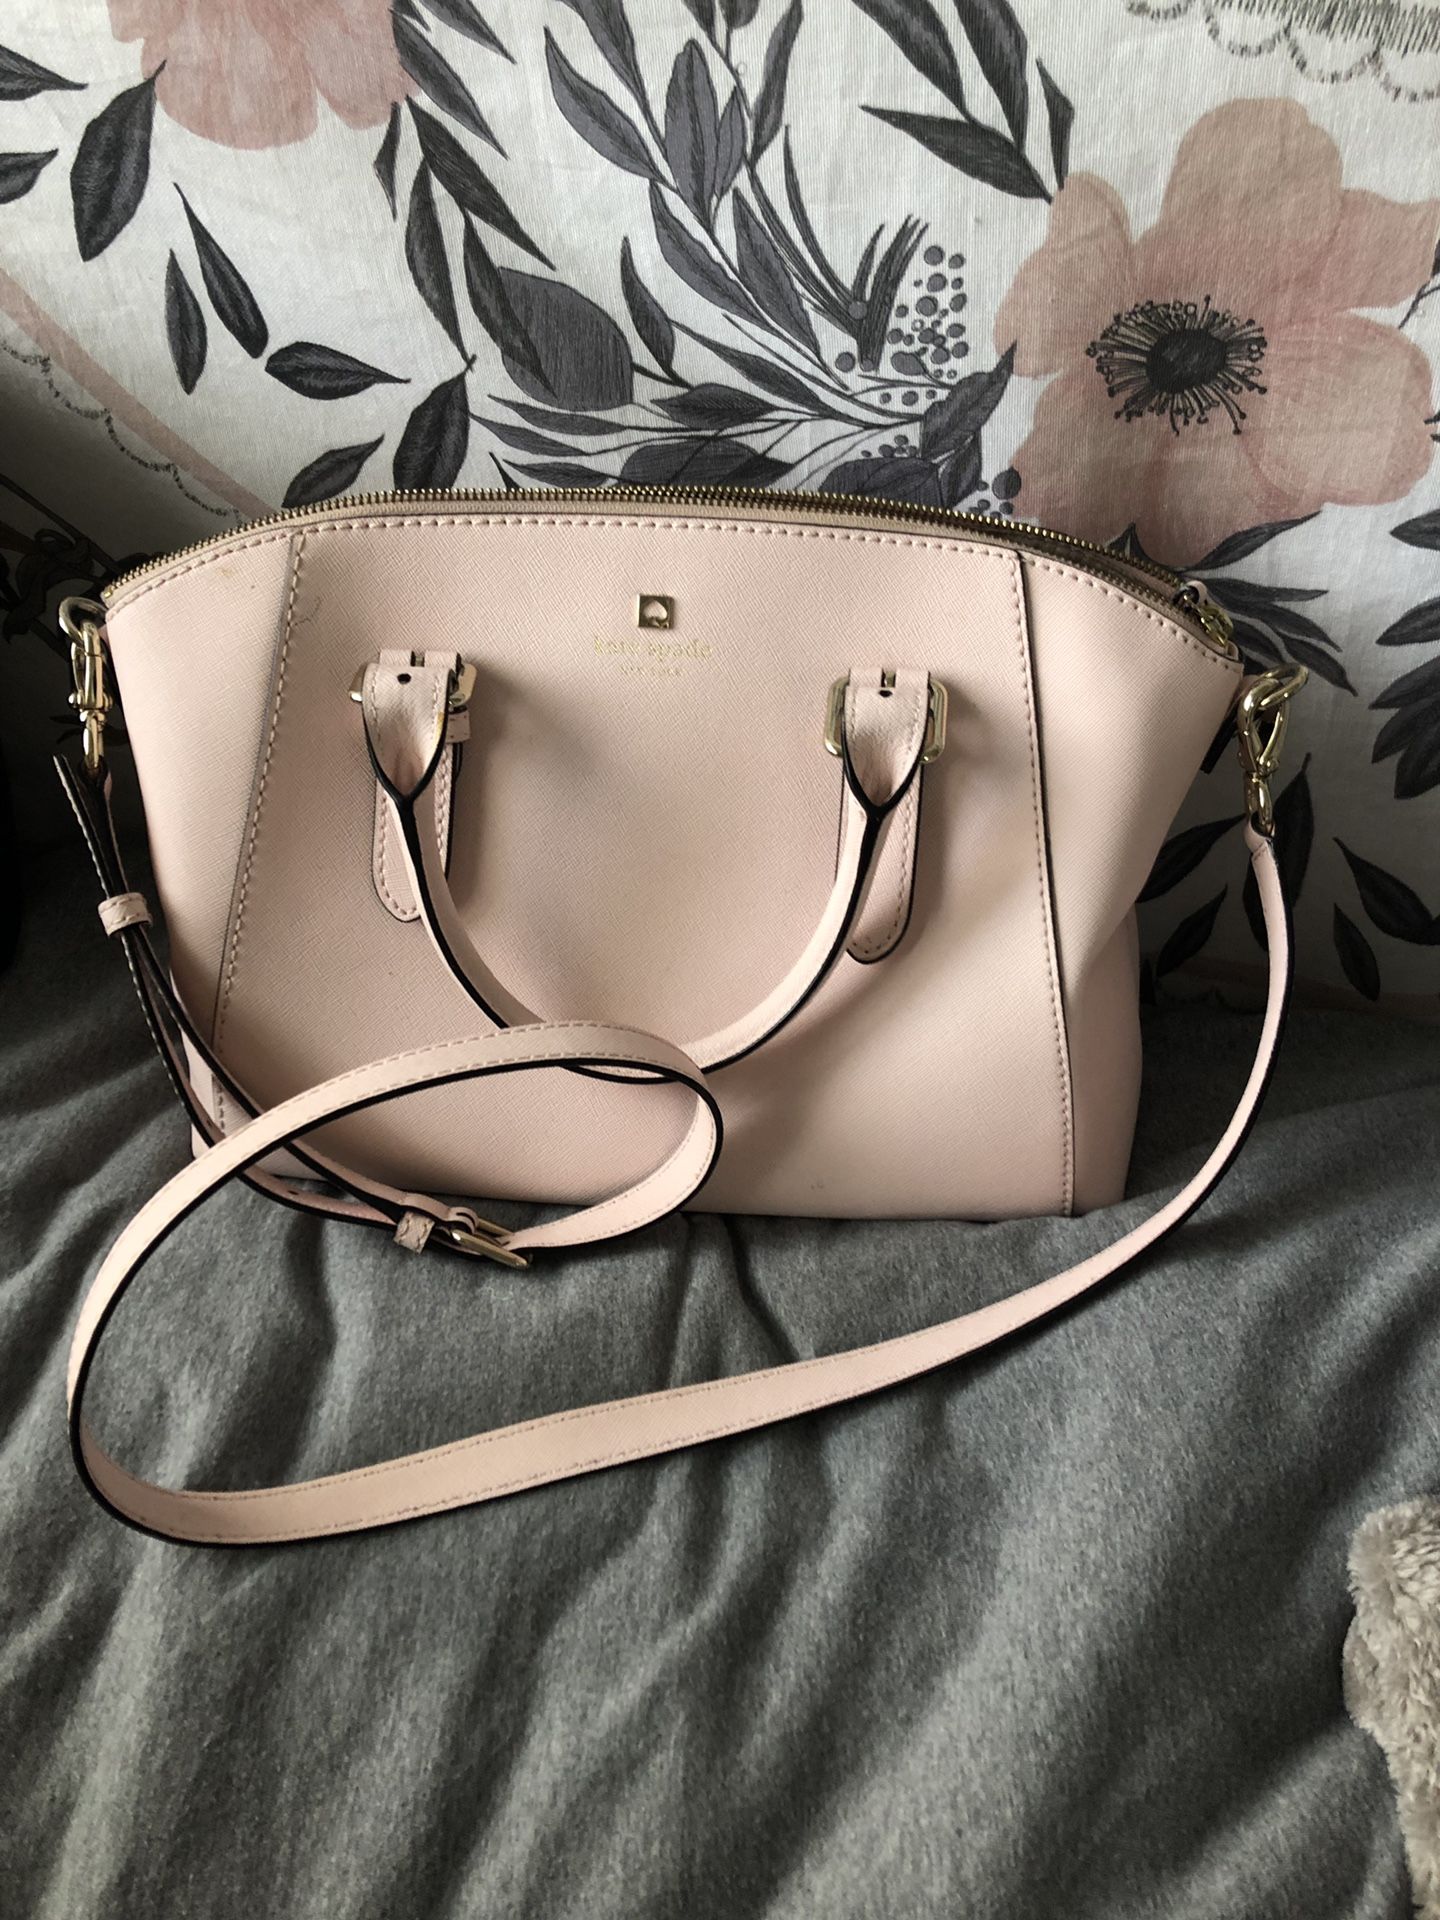 Kate spade light pink purse